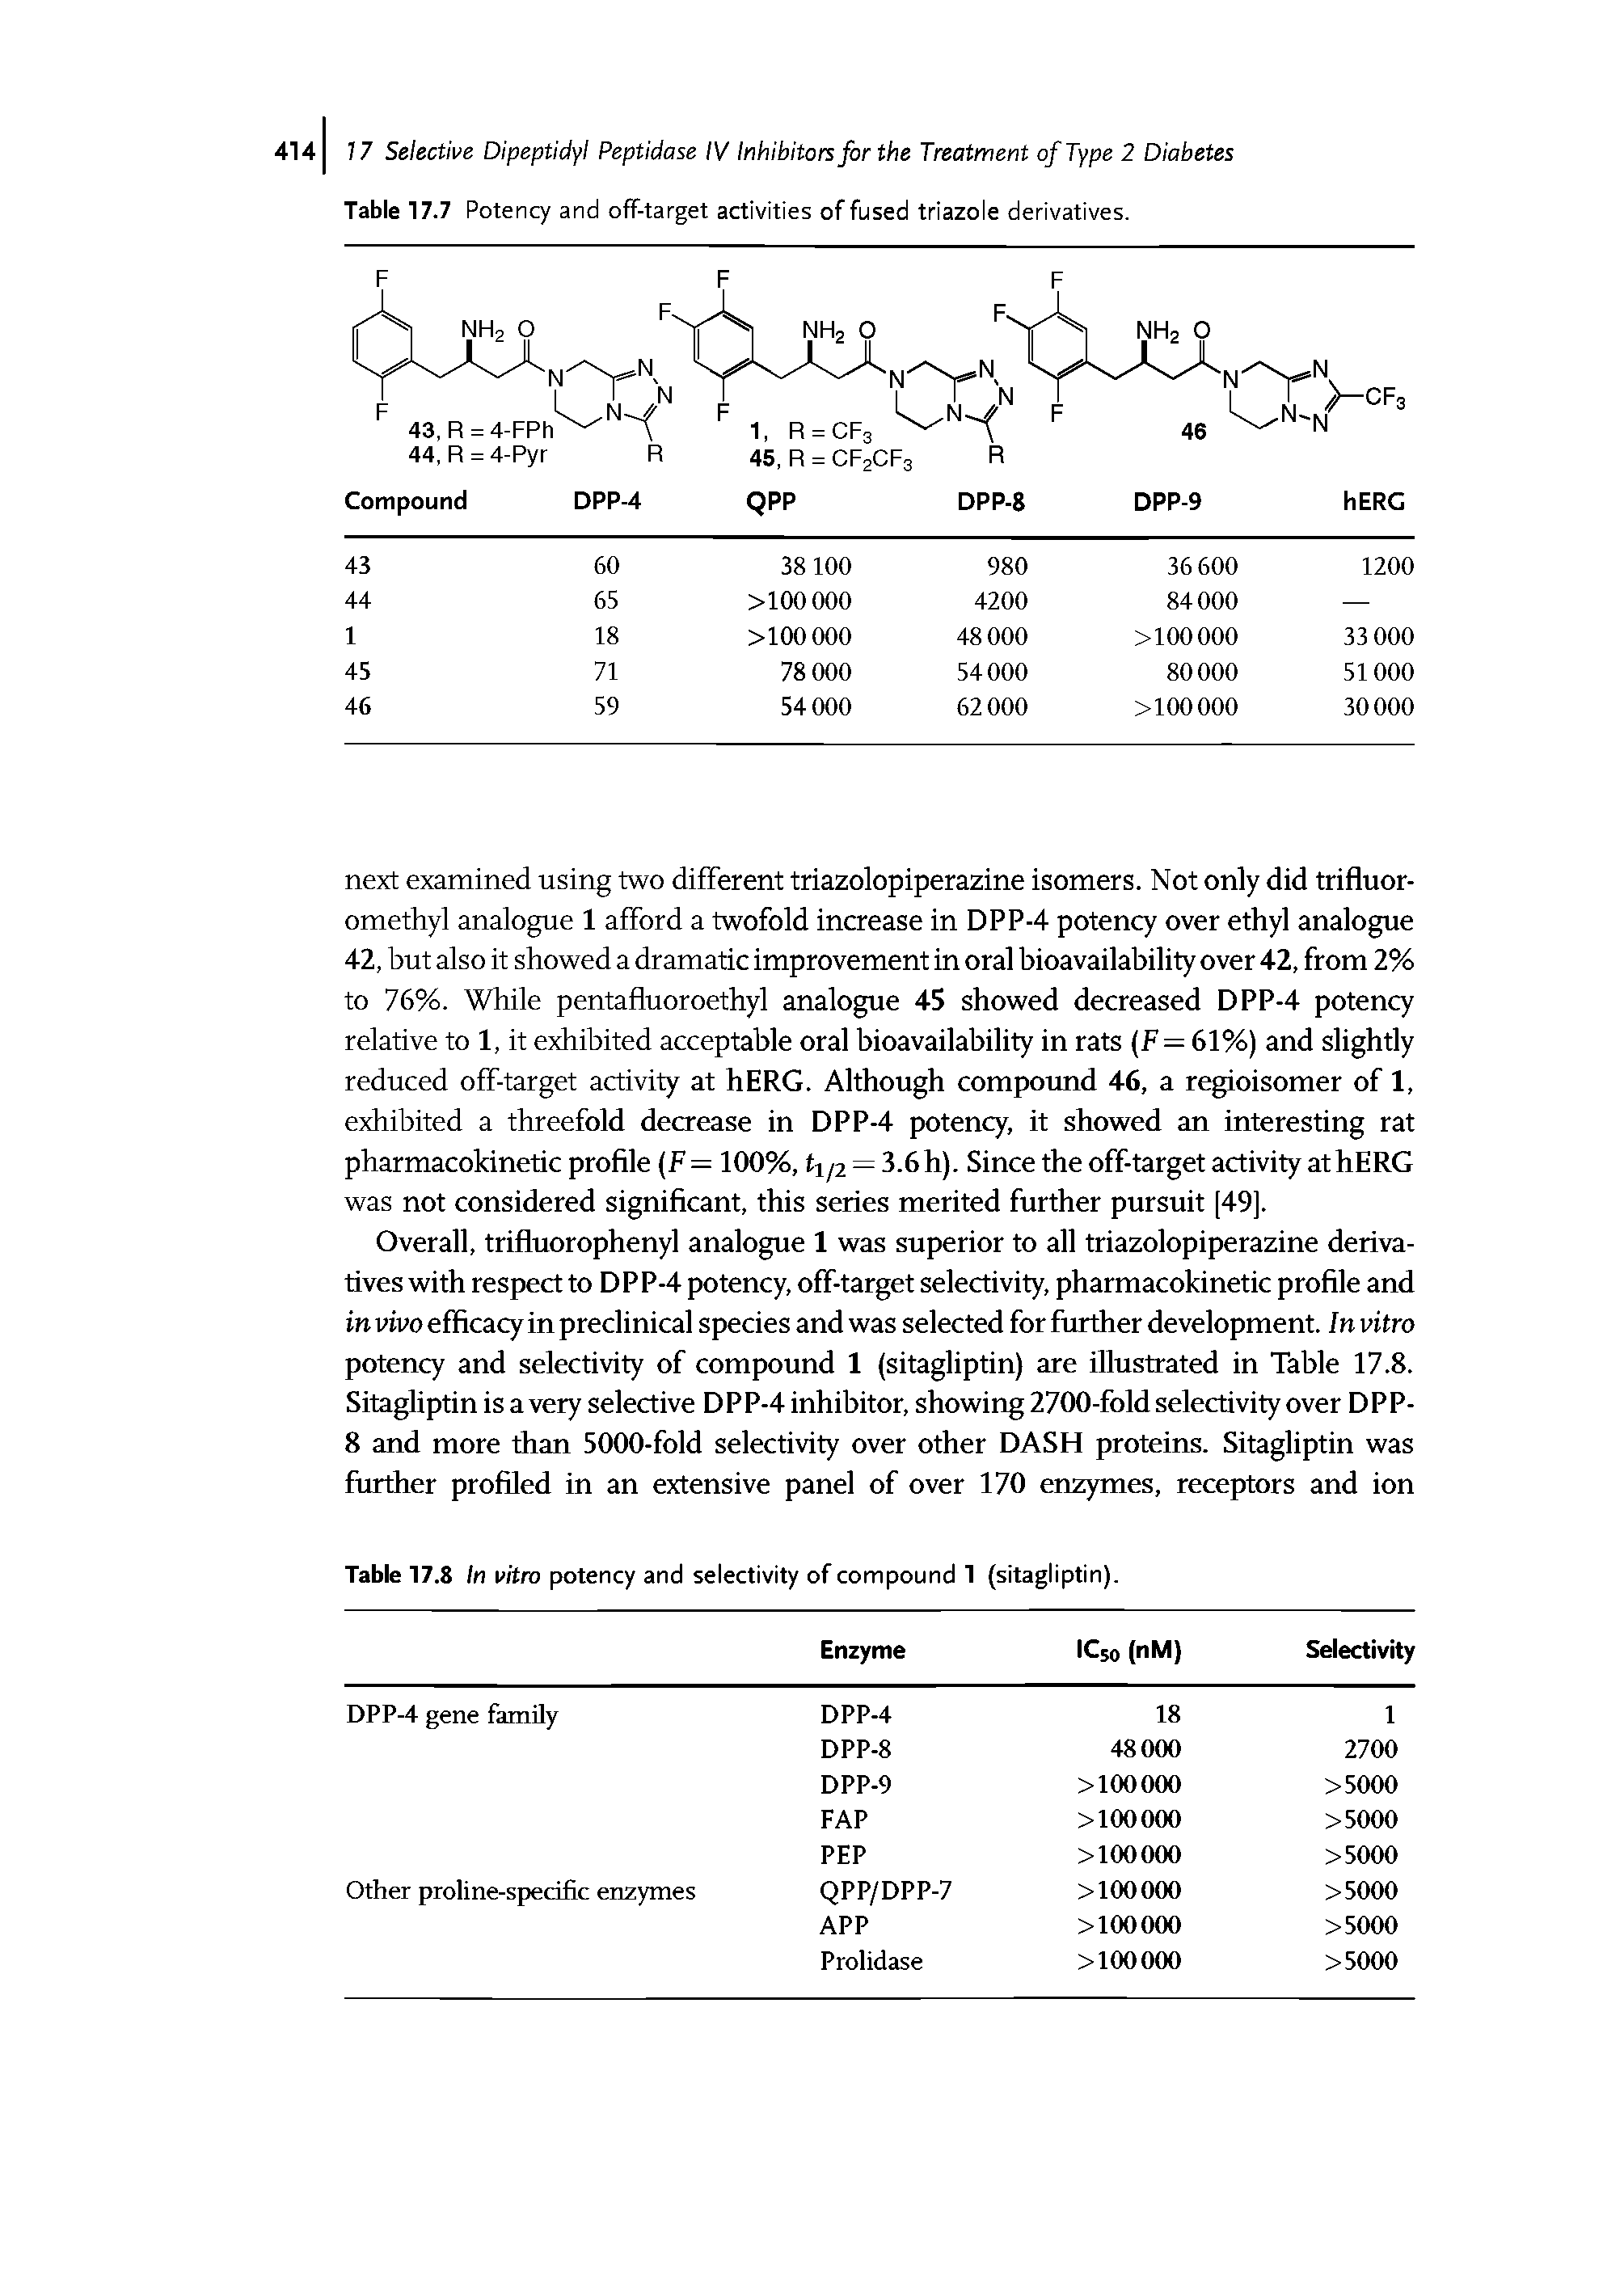 Table 17.8 In vitro potency and selectivity of compound 1 (sitagliptin).